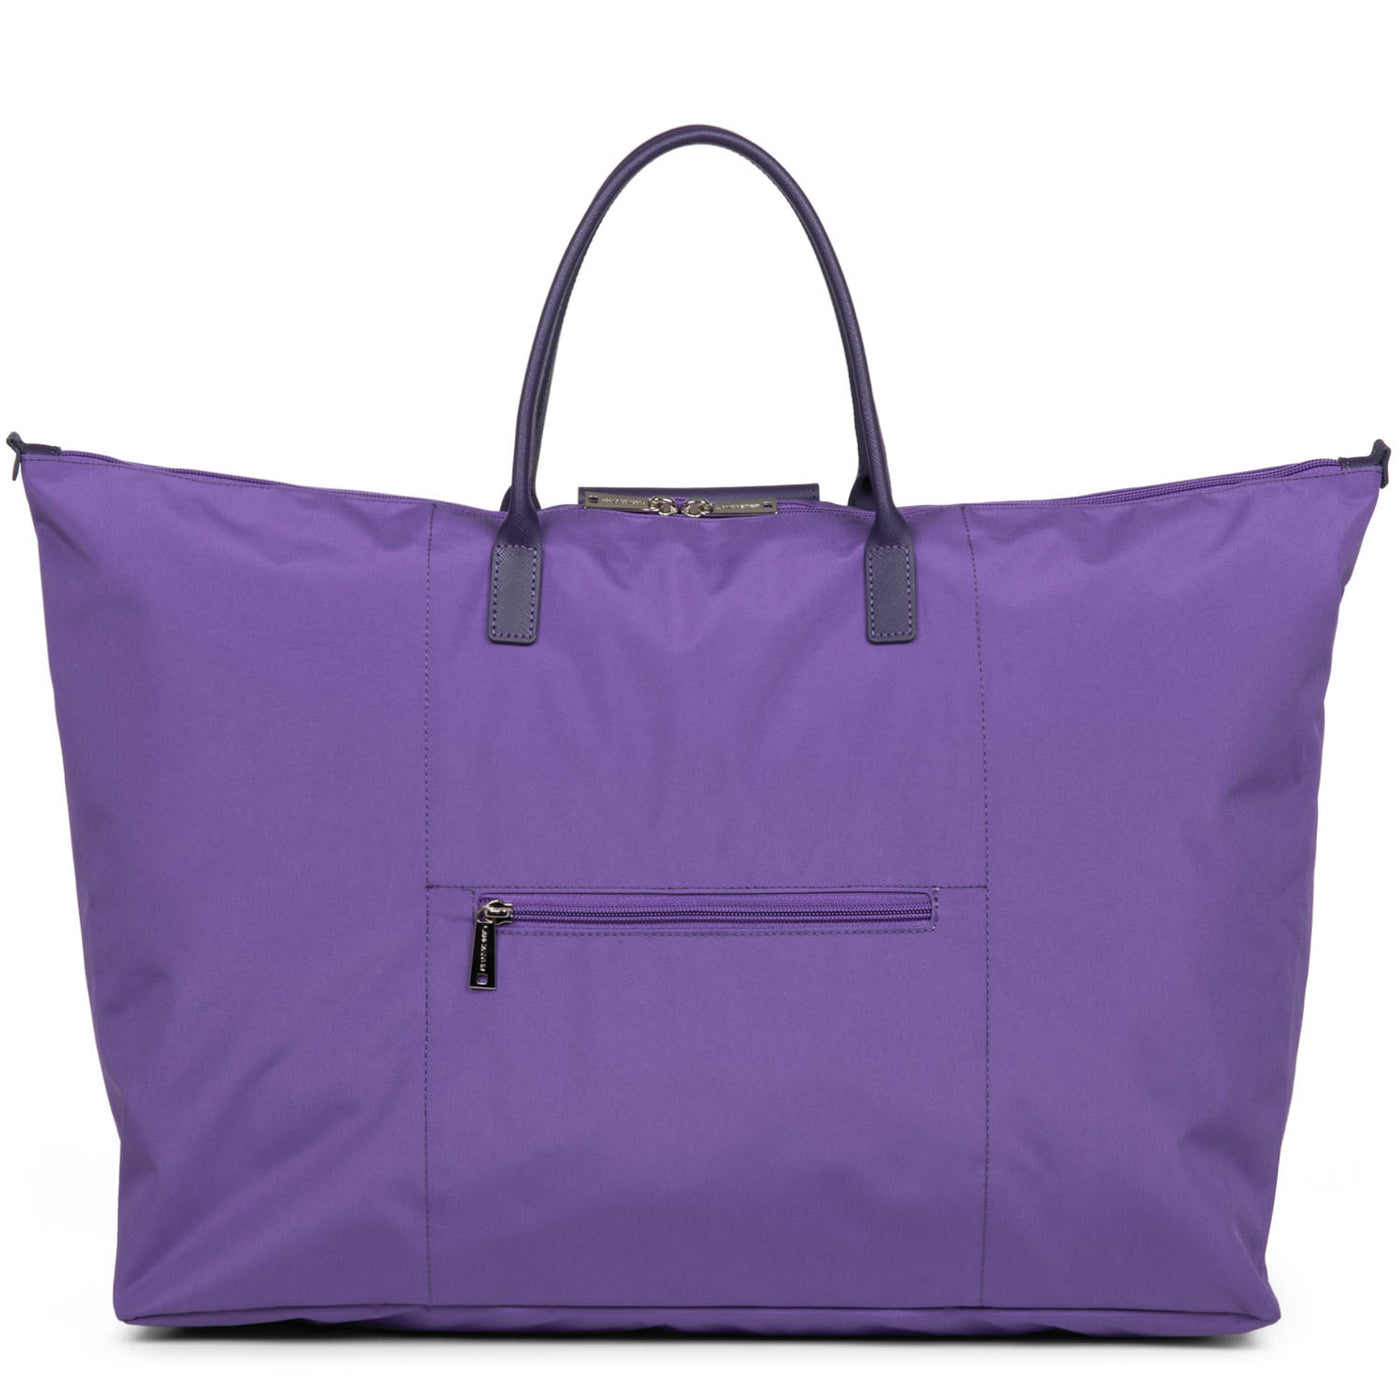 sac 24/48h - smart kba #couleur_violet